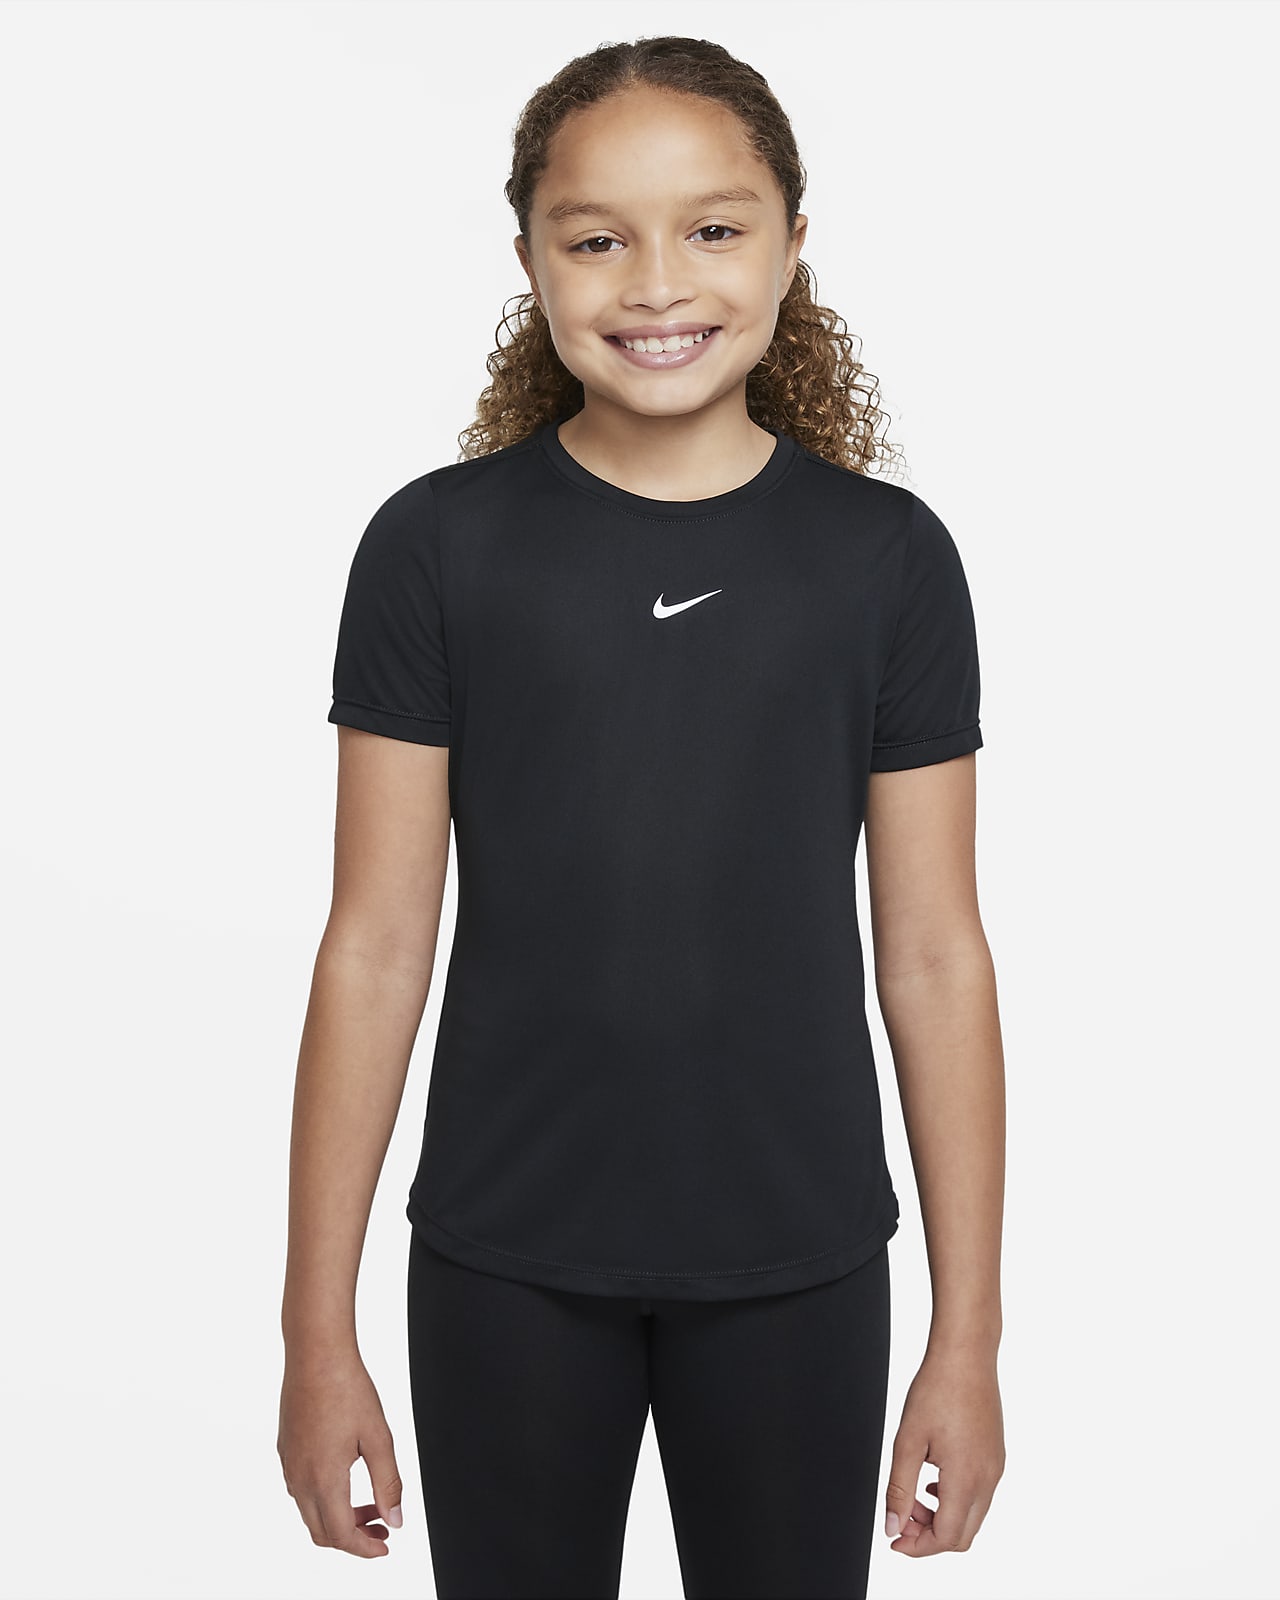 Nike One Older Kids' (Girls') Short-Sleeve Top